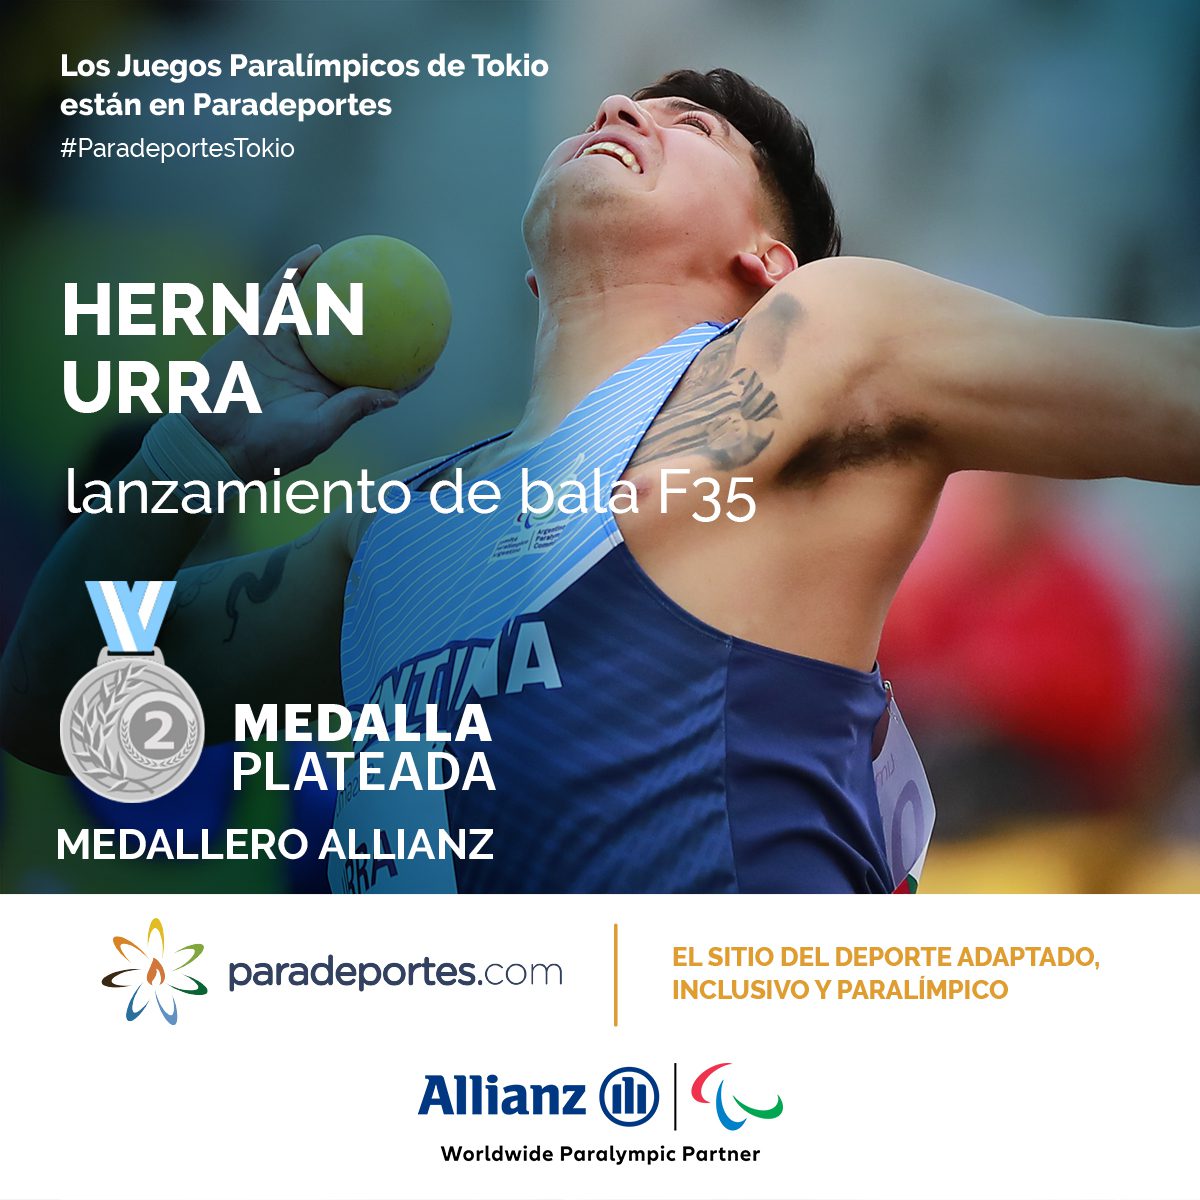 Nota: Juegos Paralímpicos: ¡Hernán Urra, medalla plateada en lanzamiento de bala!